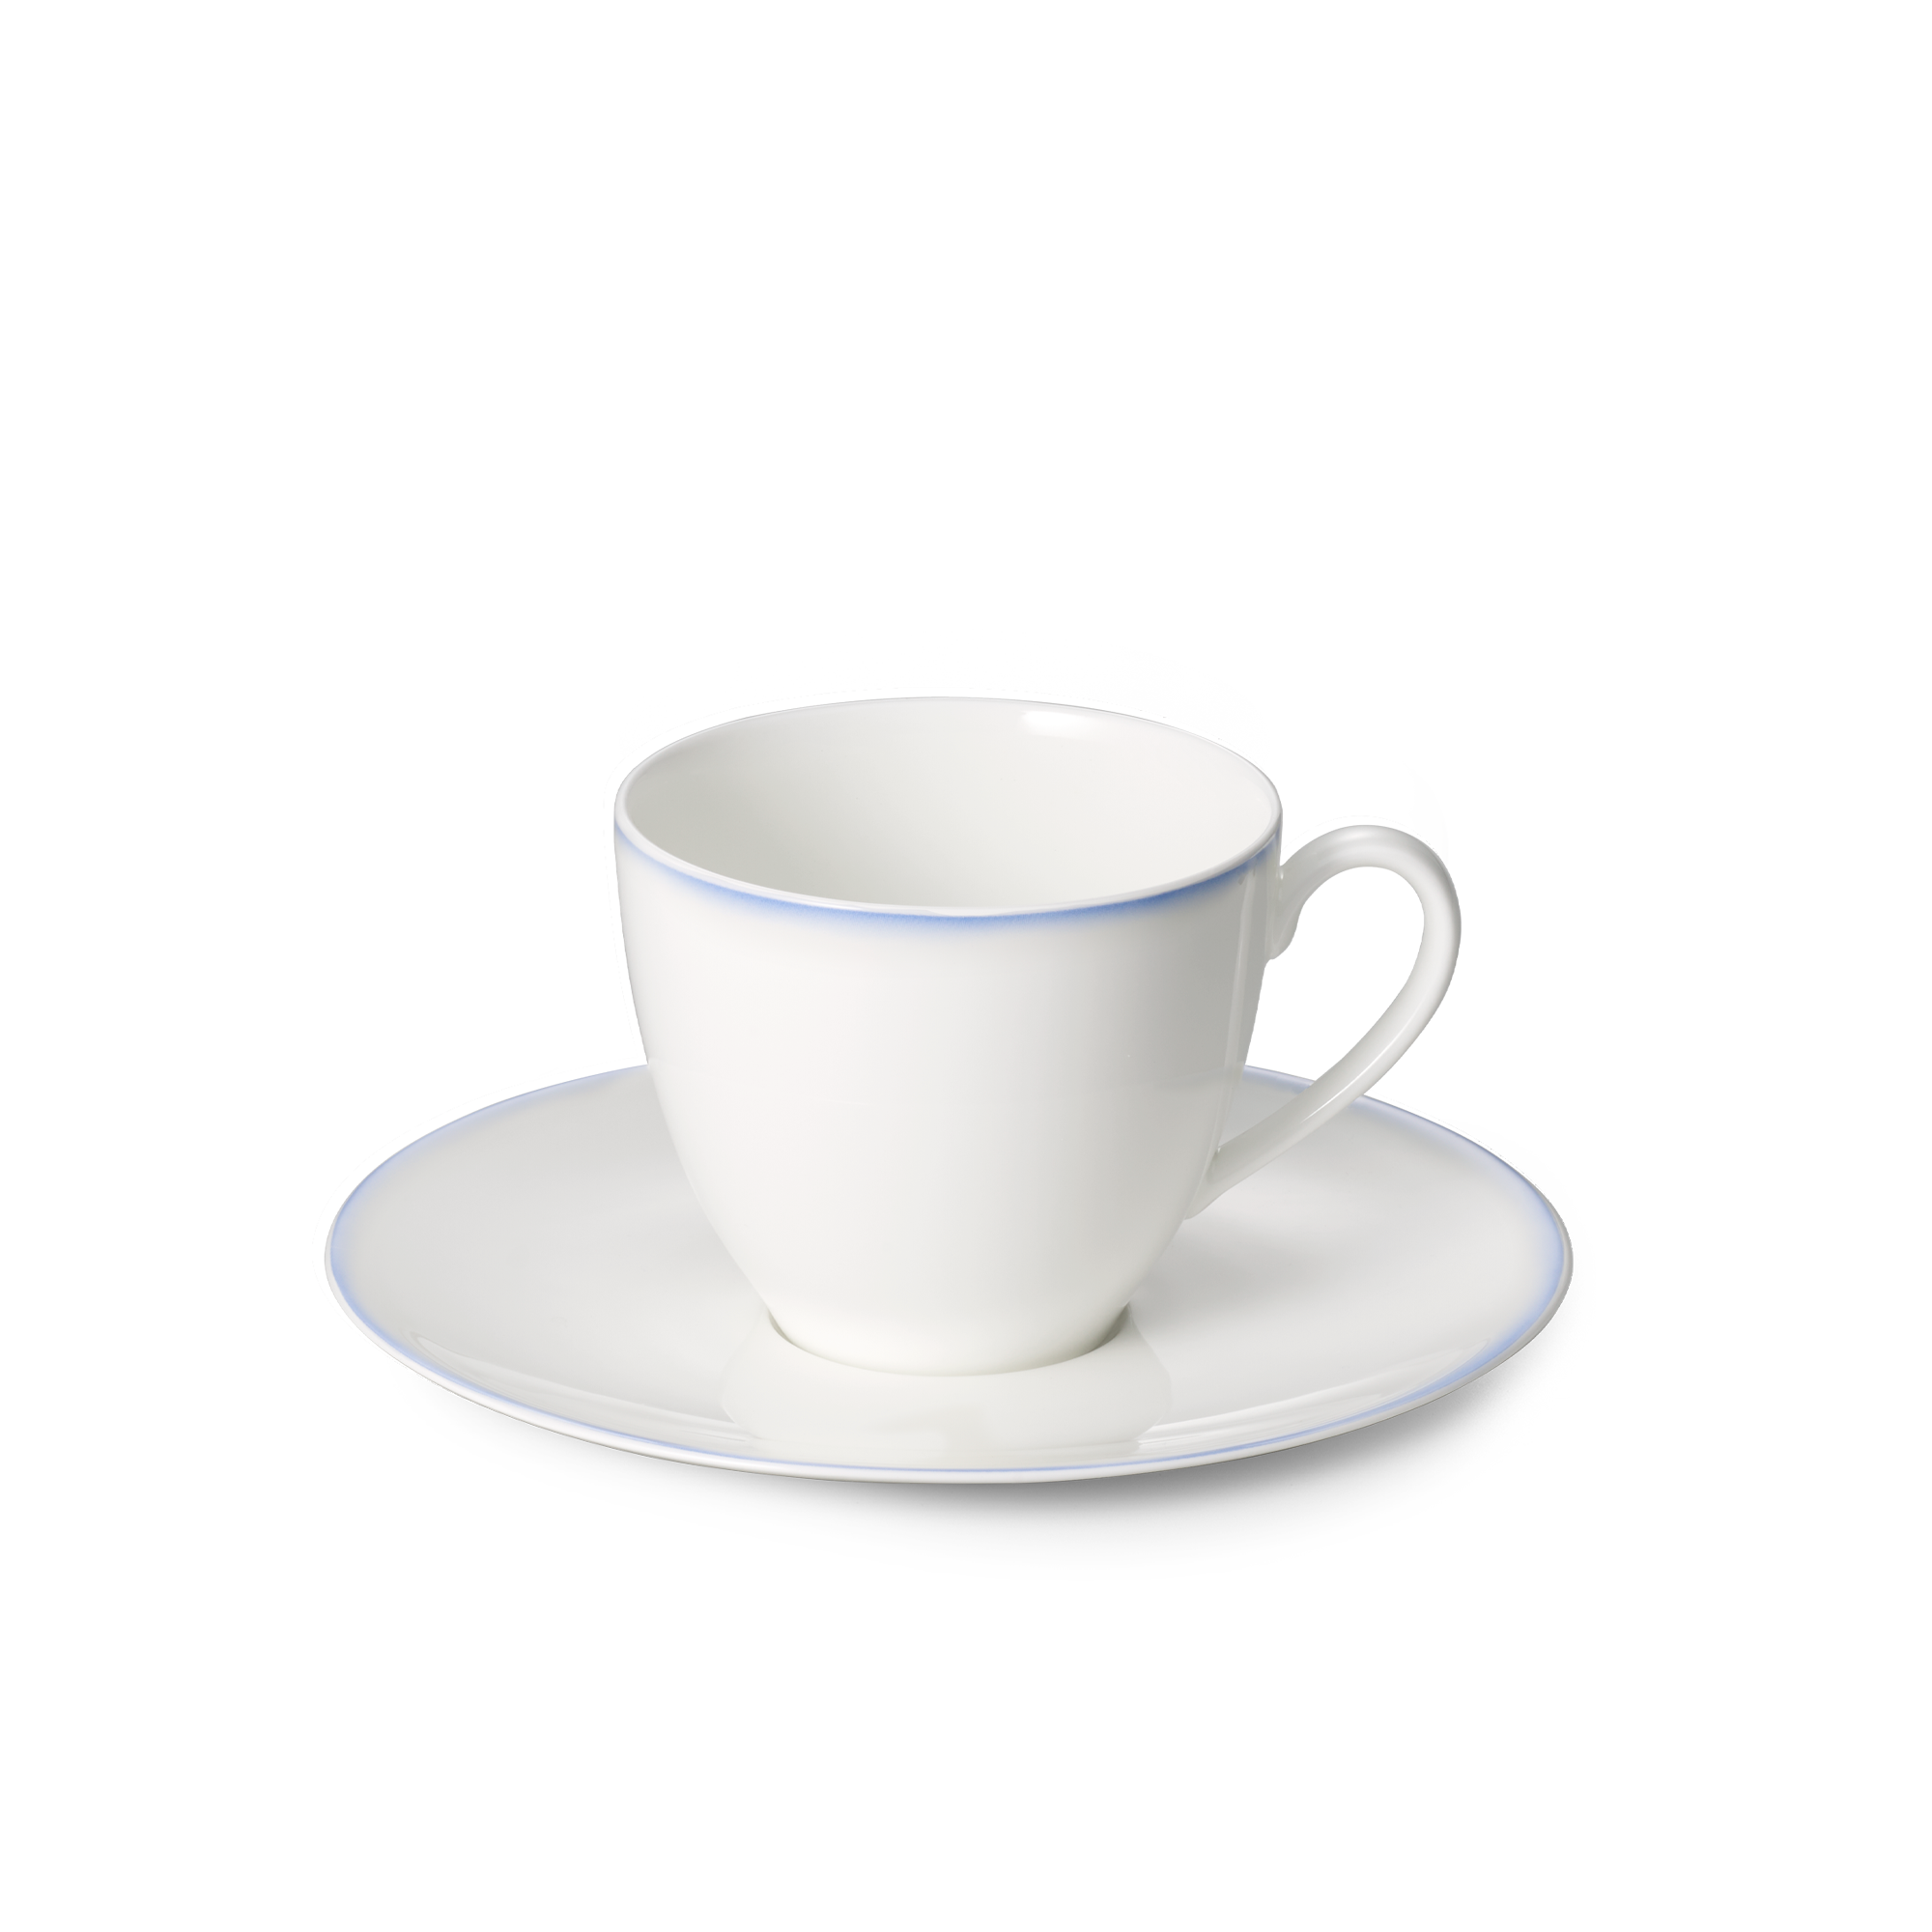 Aqua coffee cup